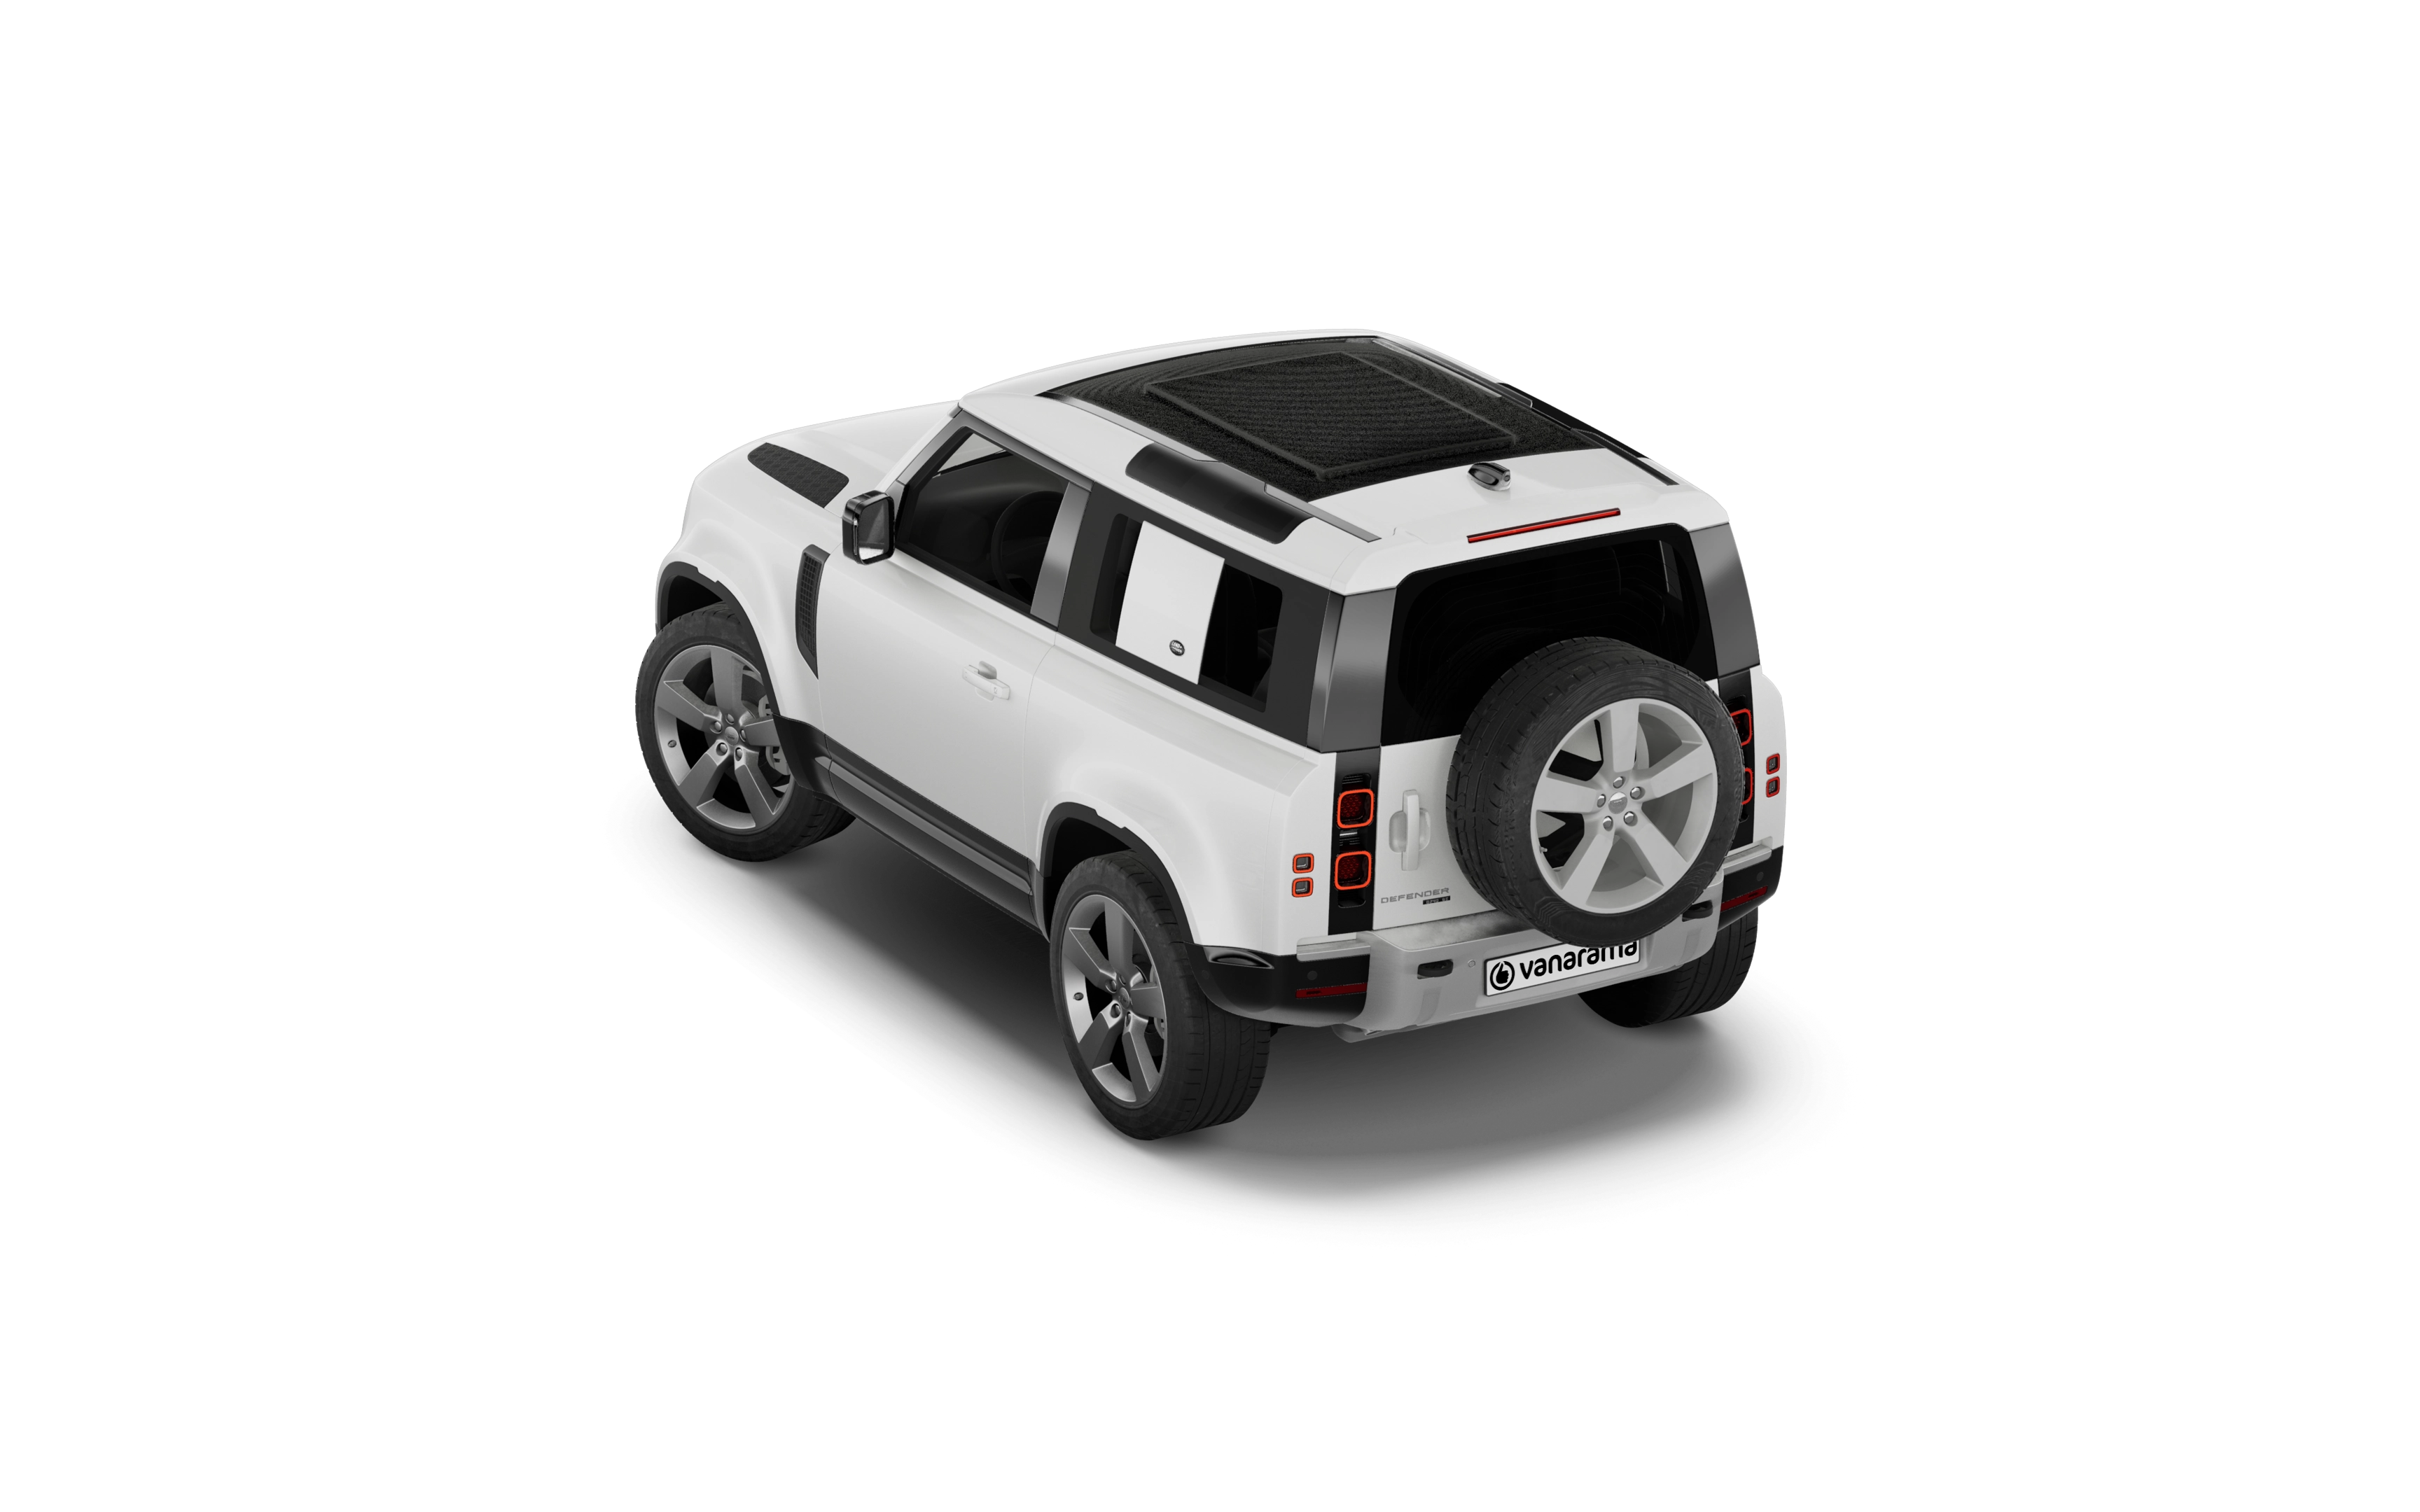 Land rover defender estate 3.0 d250 x-dynamic s 110 5 doors auto [6 seat]